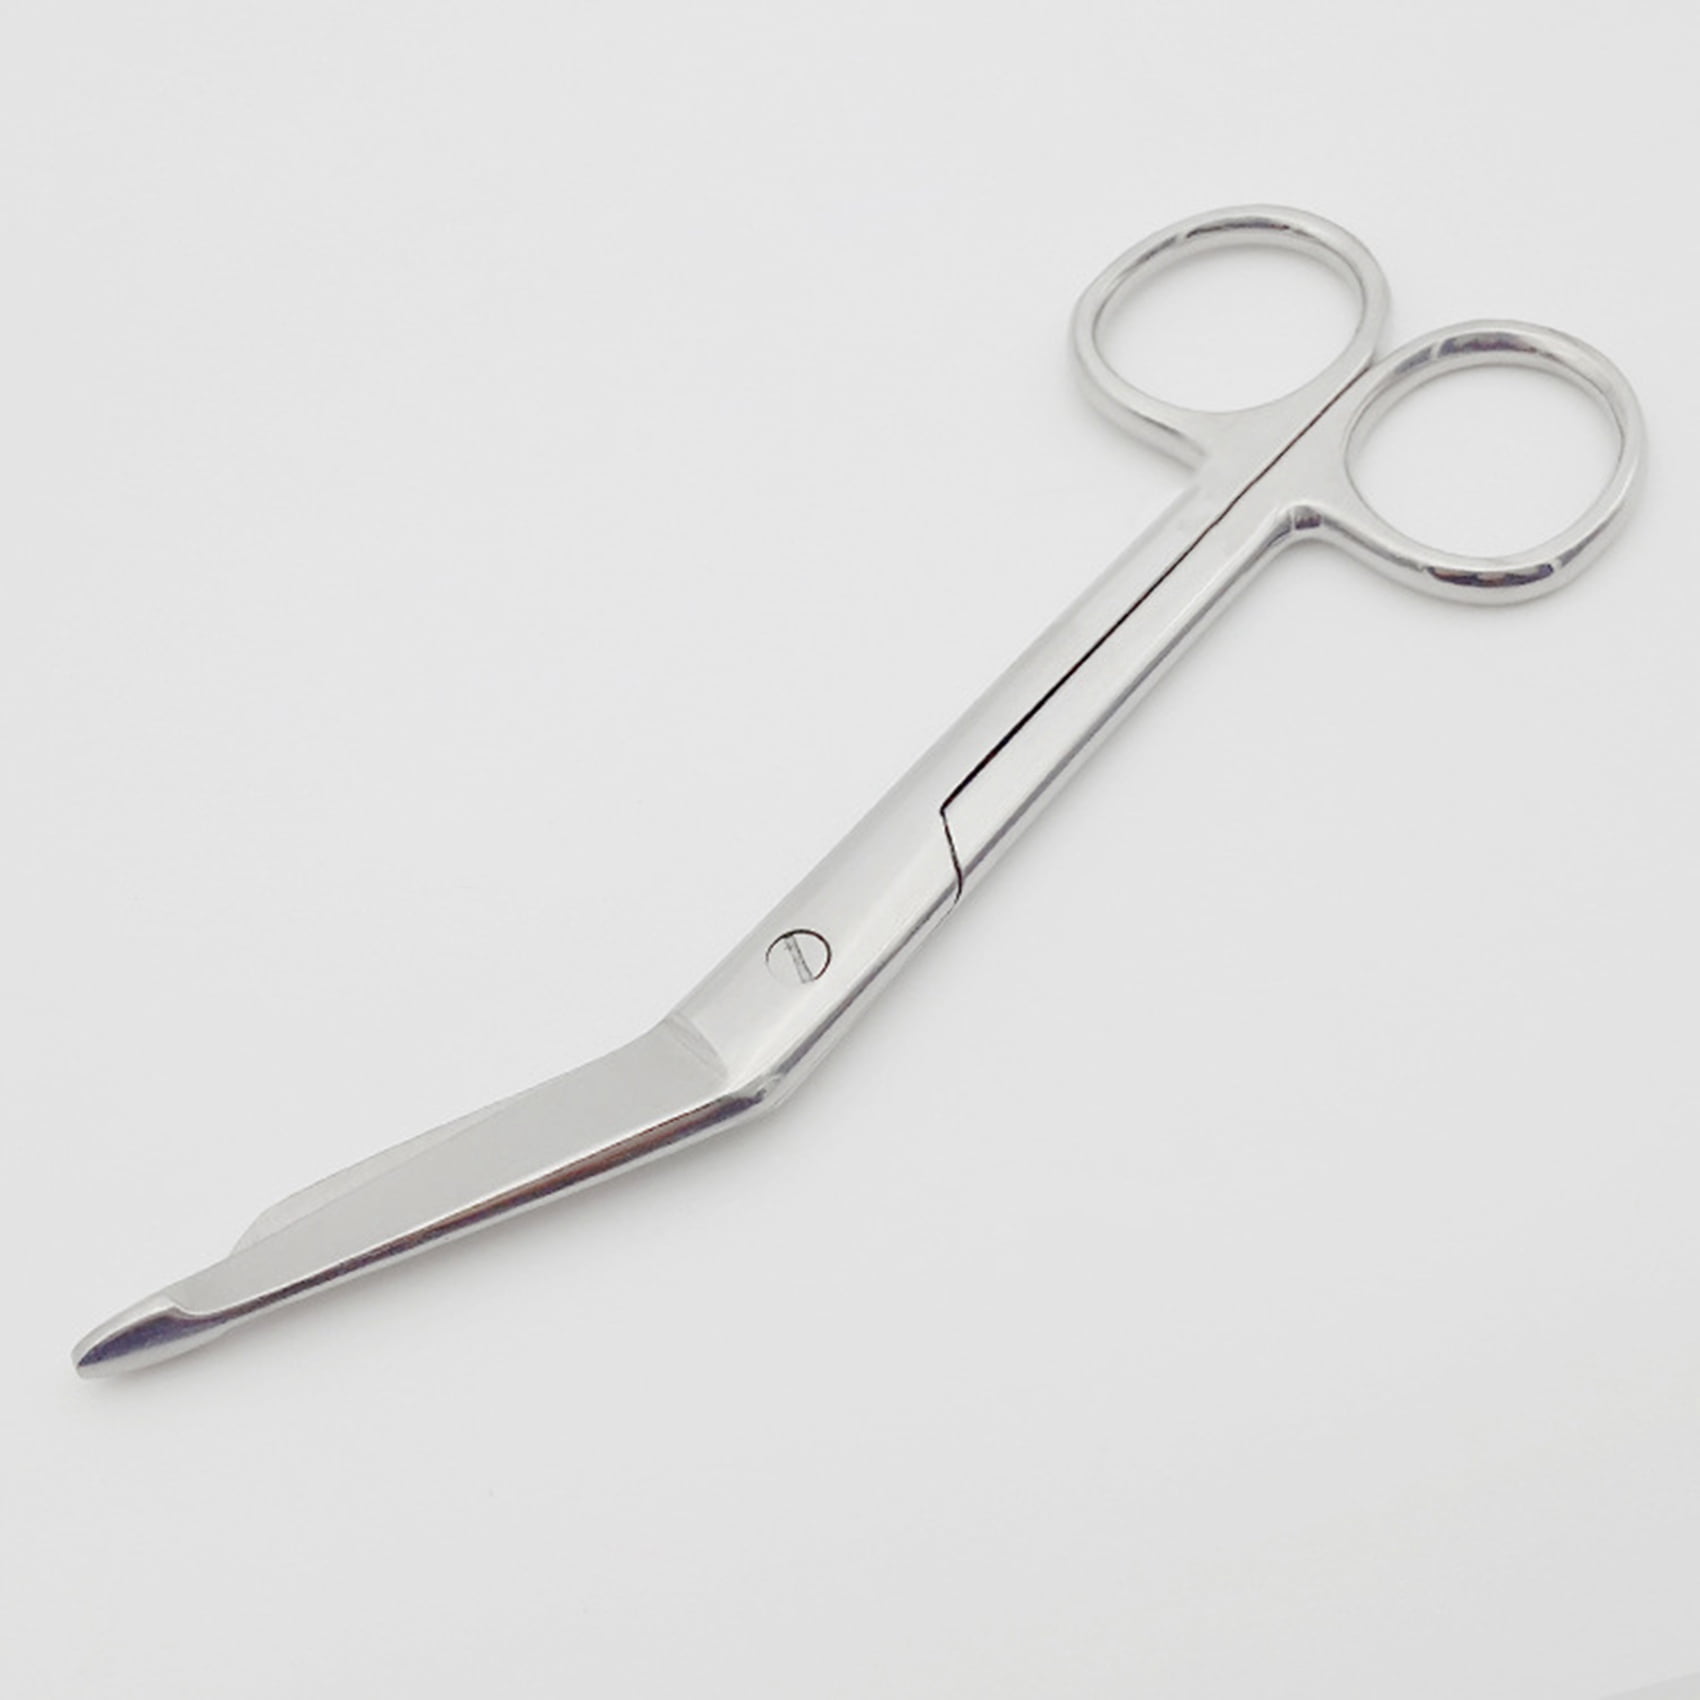 14cm Stainless Steel Blue Dew Drops Pattern Bandage Scissors 5.5 For Nursing School Medical Students